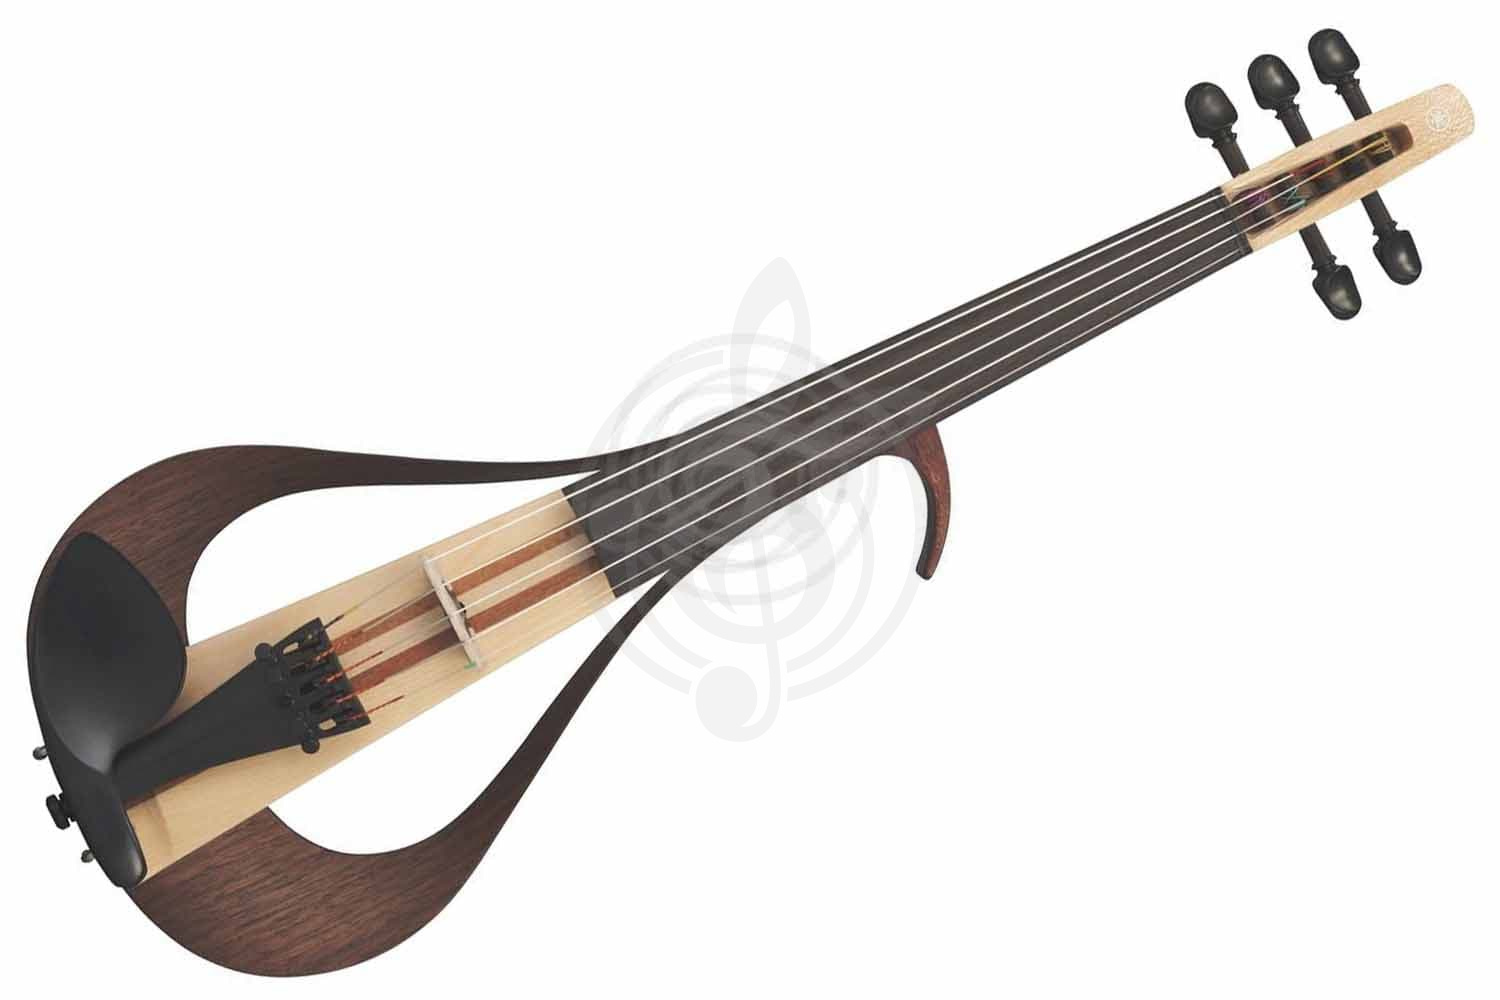 Электроскрипка Электронные скрипки Yamaha Yamaha YEV105N - электроскрипка с пассивным питанием, 5 струн YEV105N//001 - фото 1